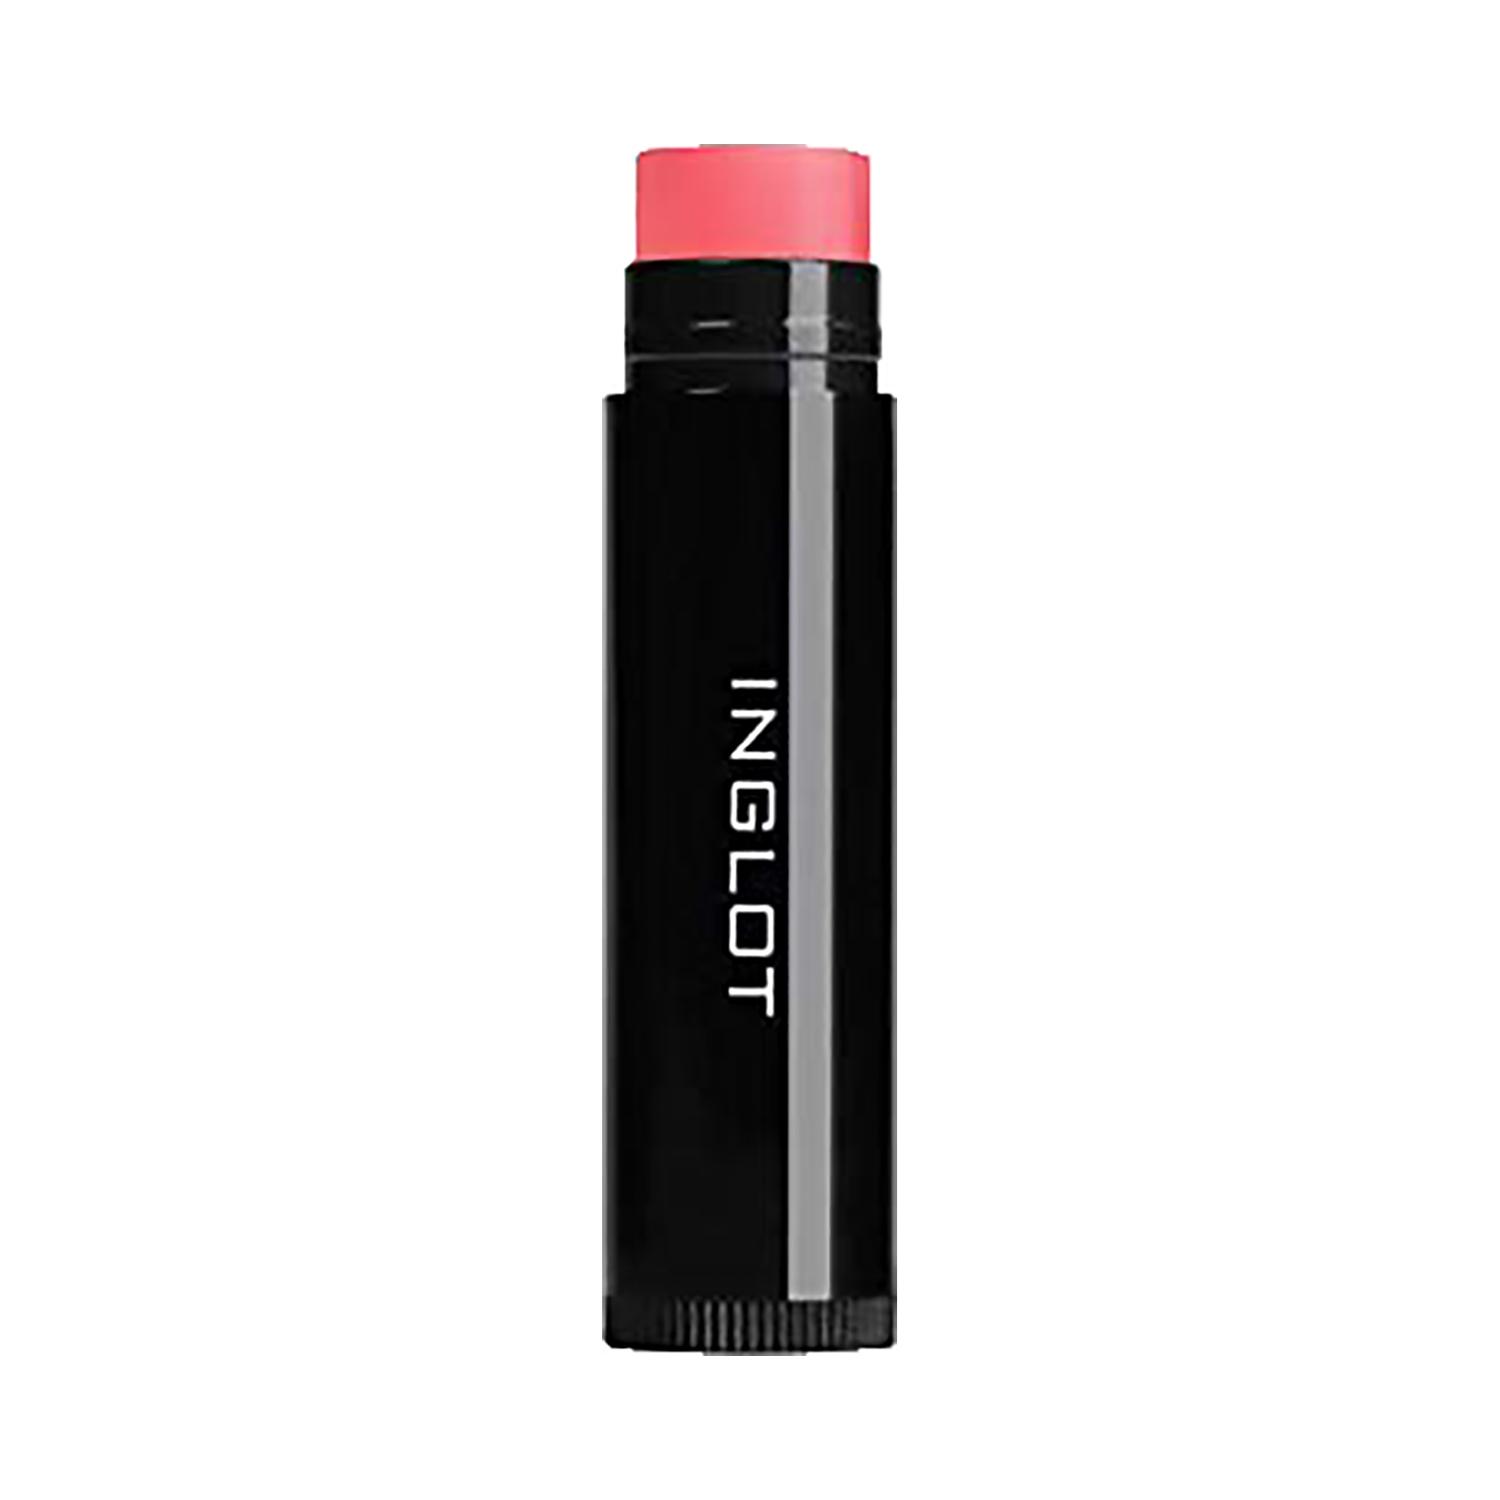 inglot rich care lipstick - 03 pink (5g)